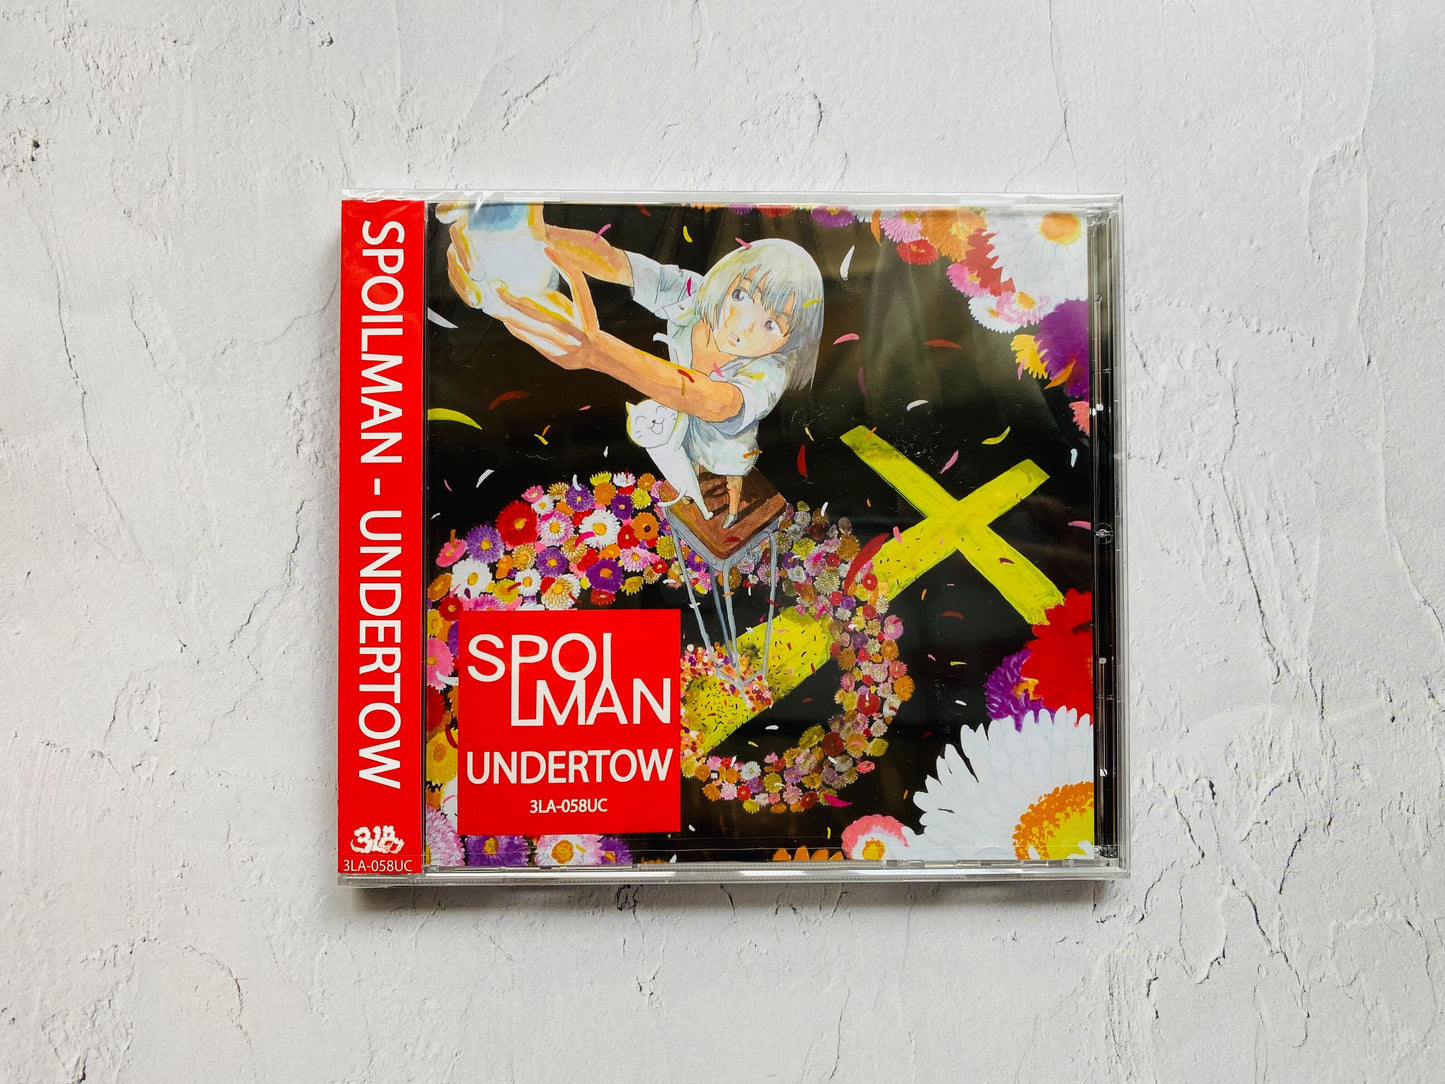 SPOILMAN - "UNDERTOW" (CD)